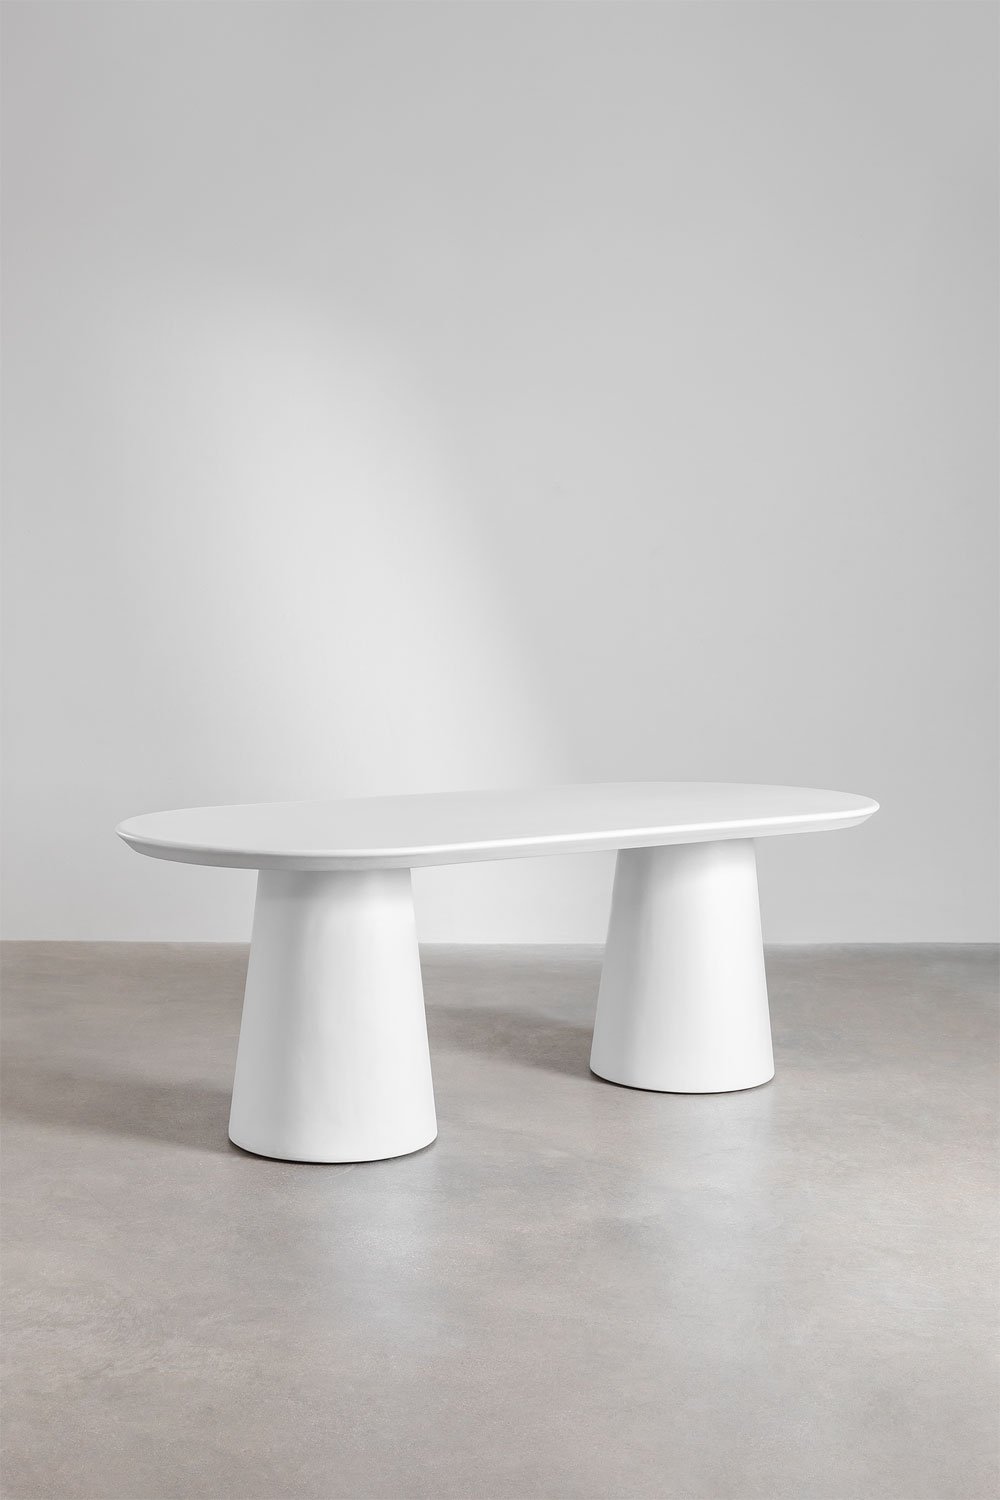 Ovale tuintafel in beton (220x95 cm) Noemi, galerij beeld 2